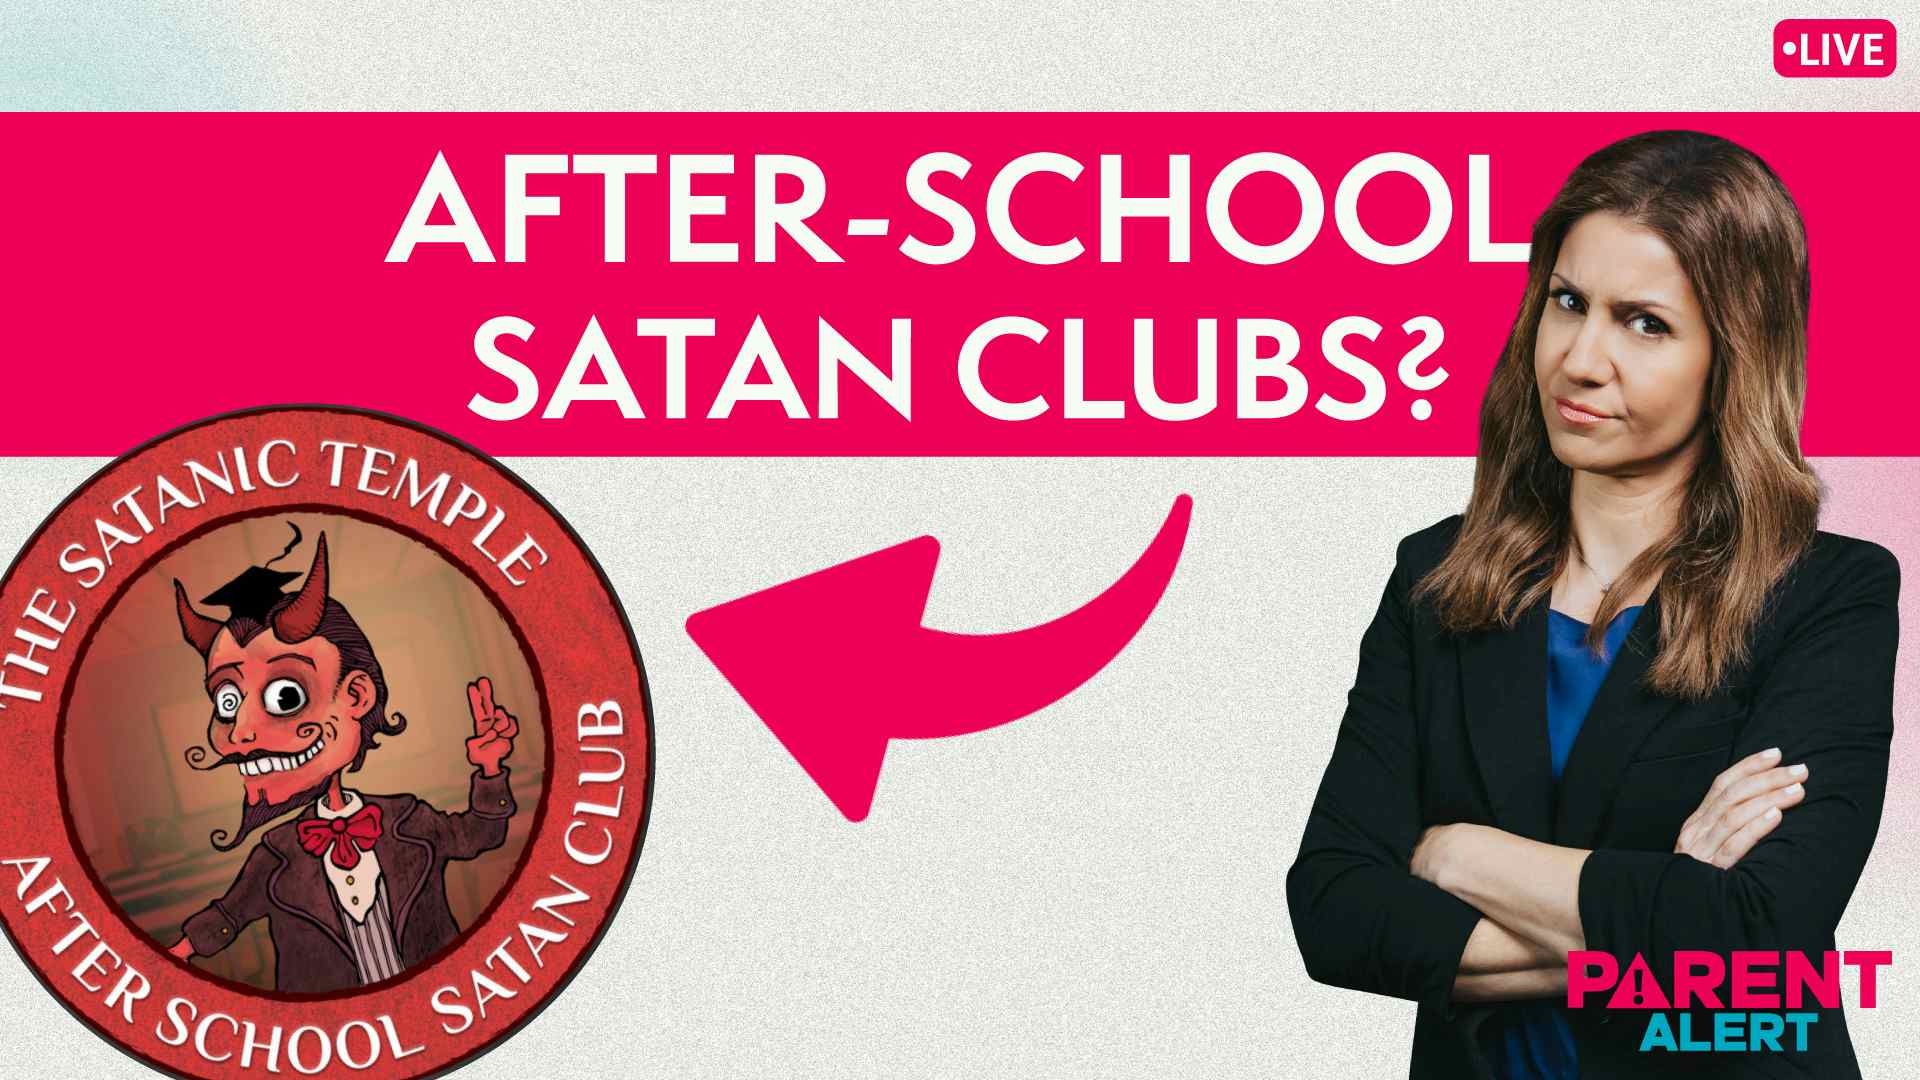 Parent Alert: After-School Satan Clubs?